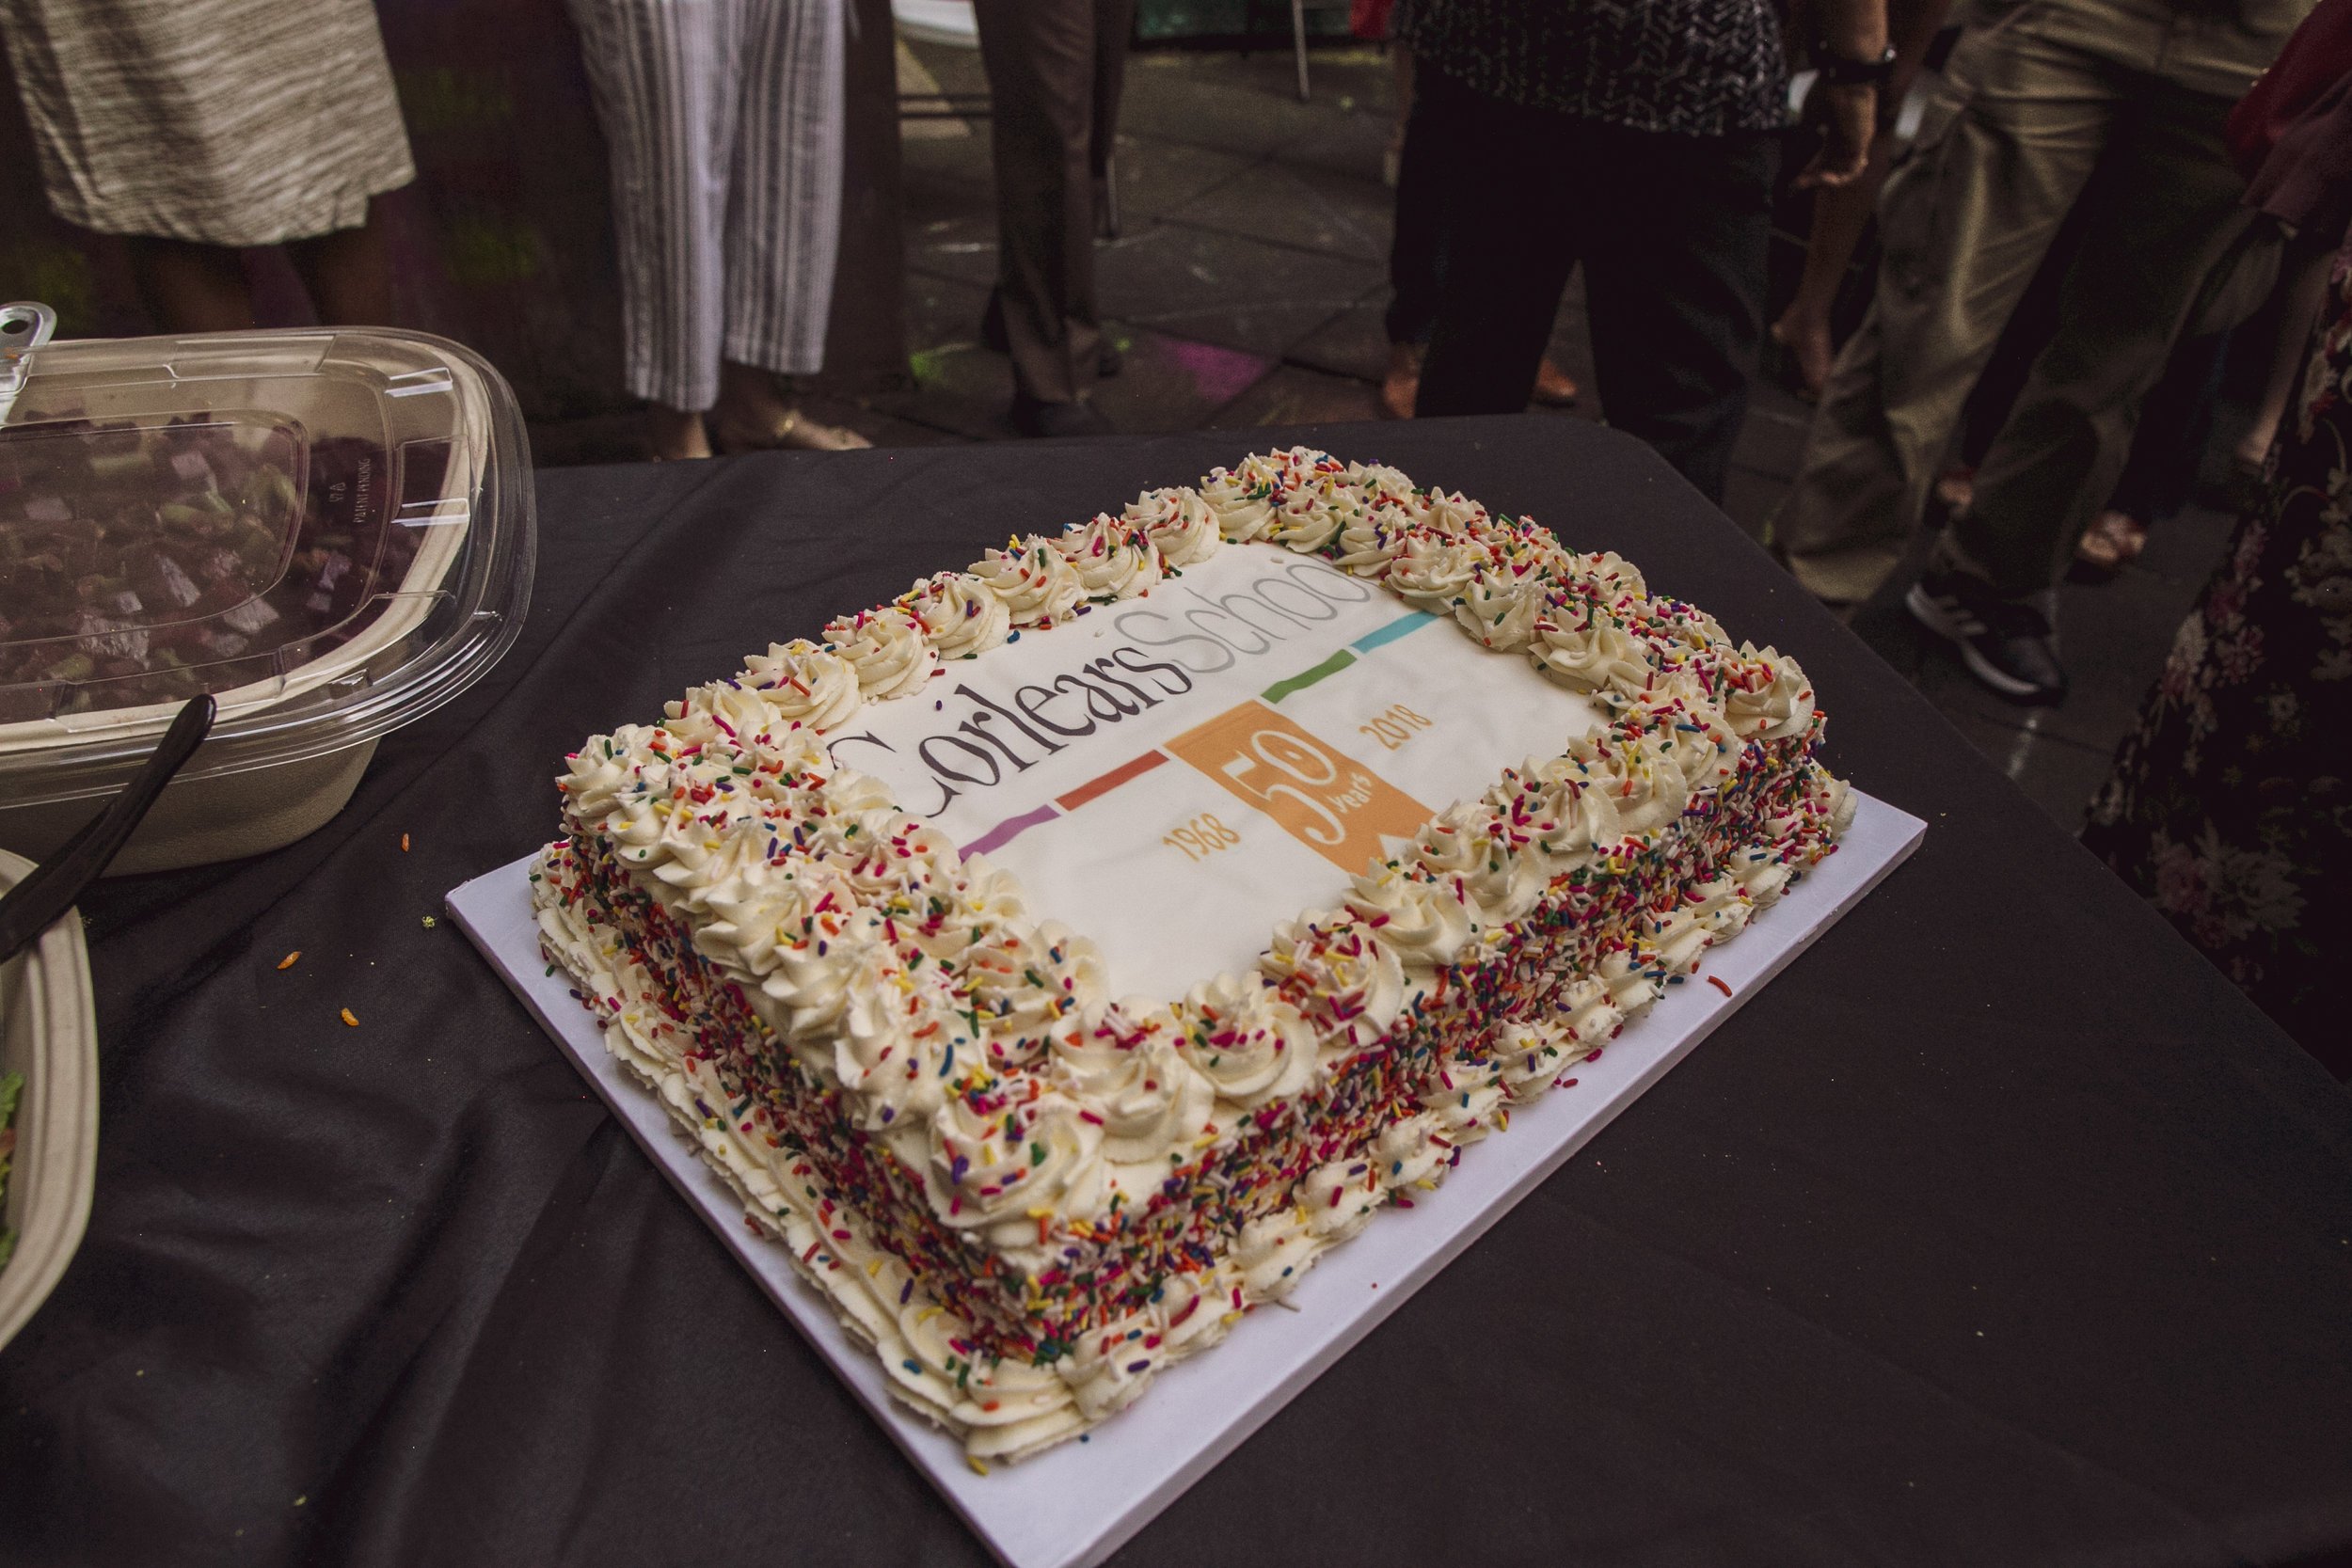 Birthday cake celebrating Corlears 50th birthday